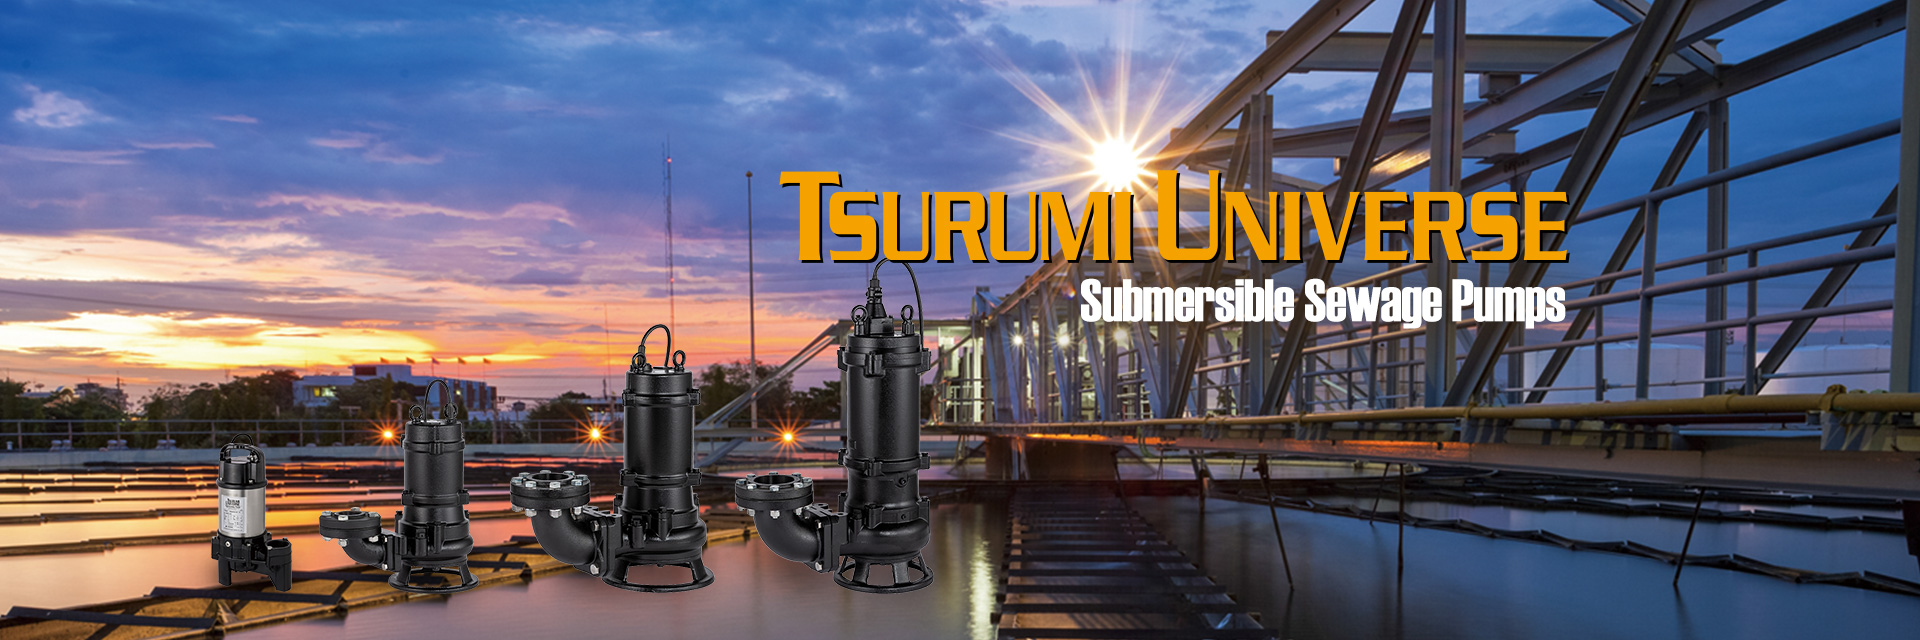 TSURUMI UNIVERSE : Submersible Sewage Pumps